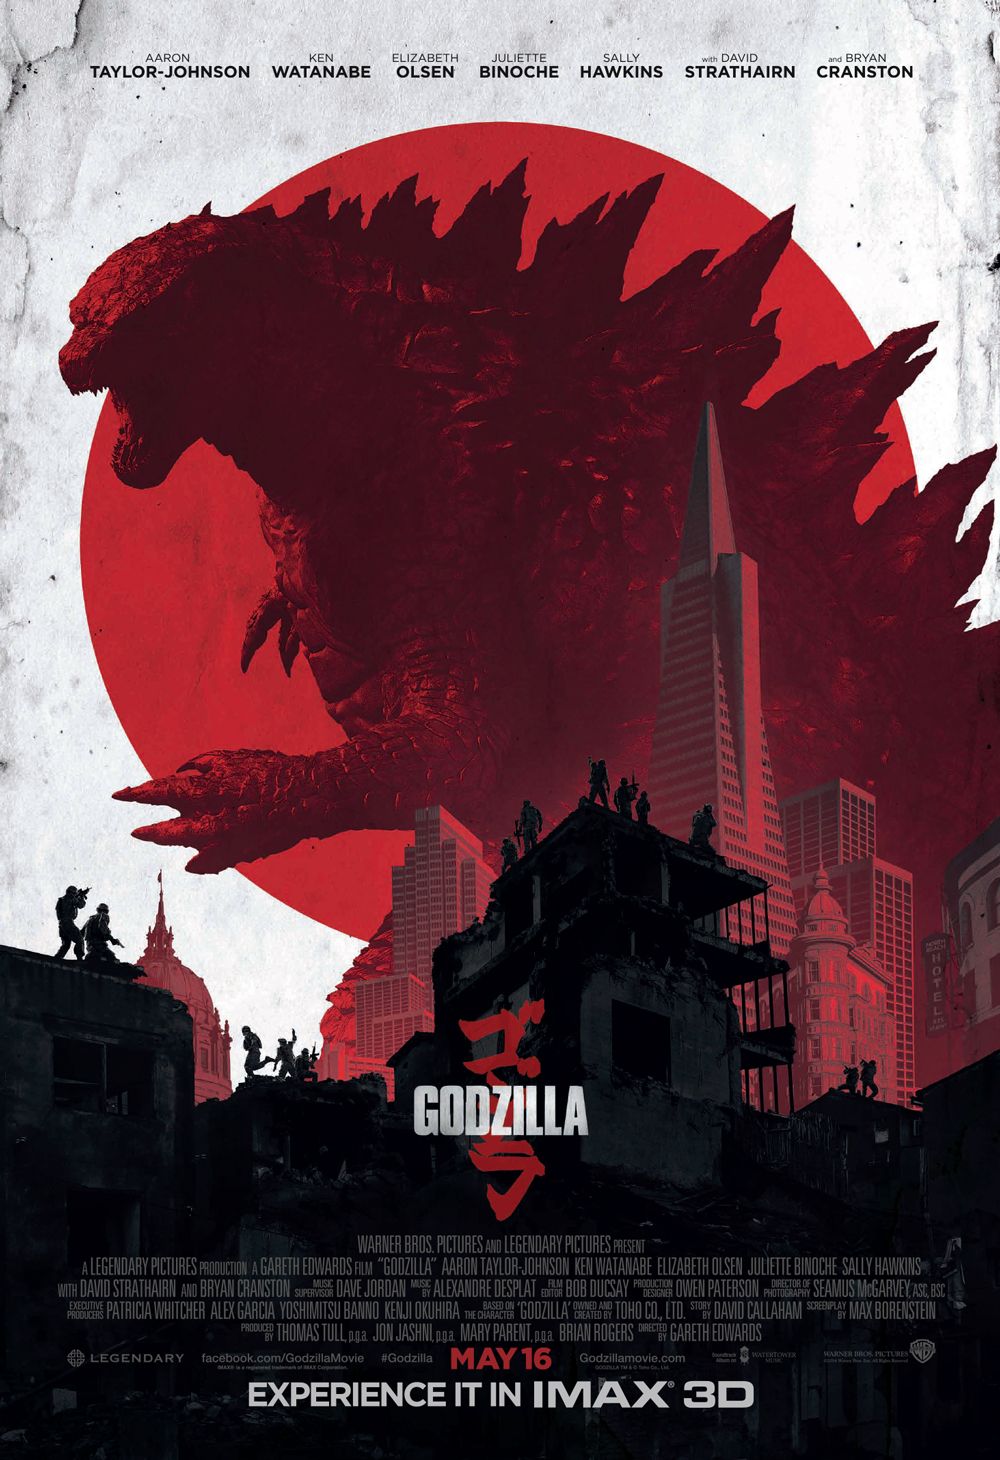 IMAX Poster for Godzilla